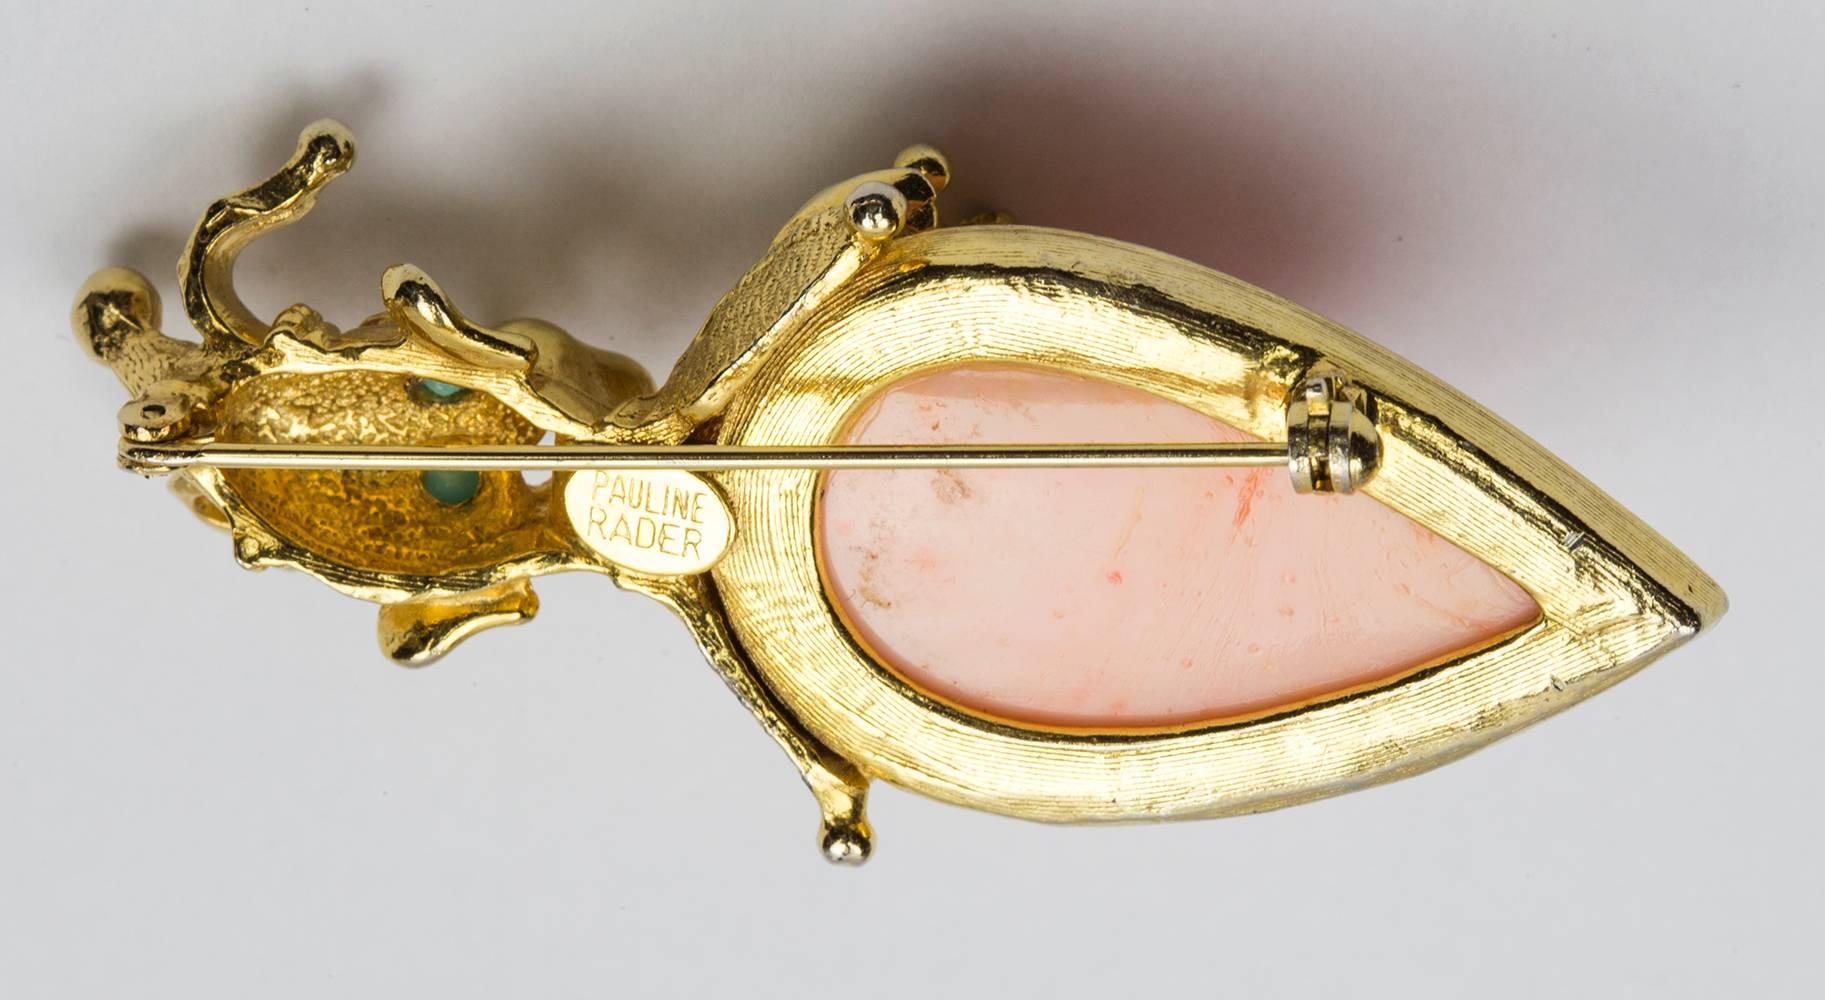 pauline rader jewelry history